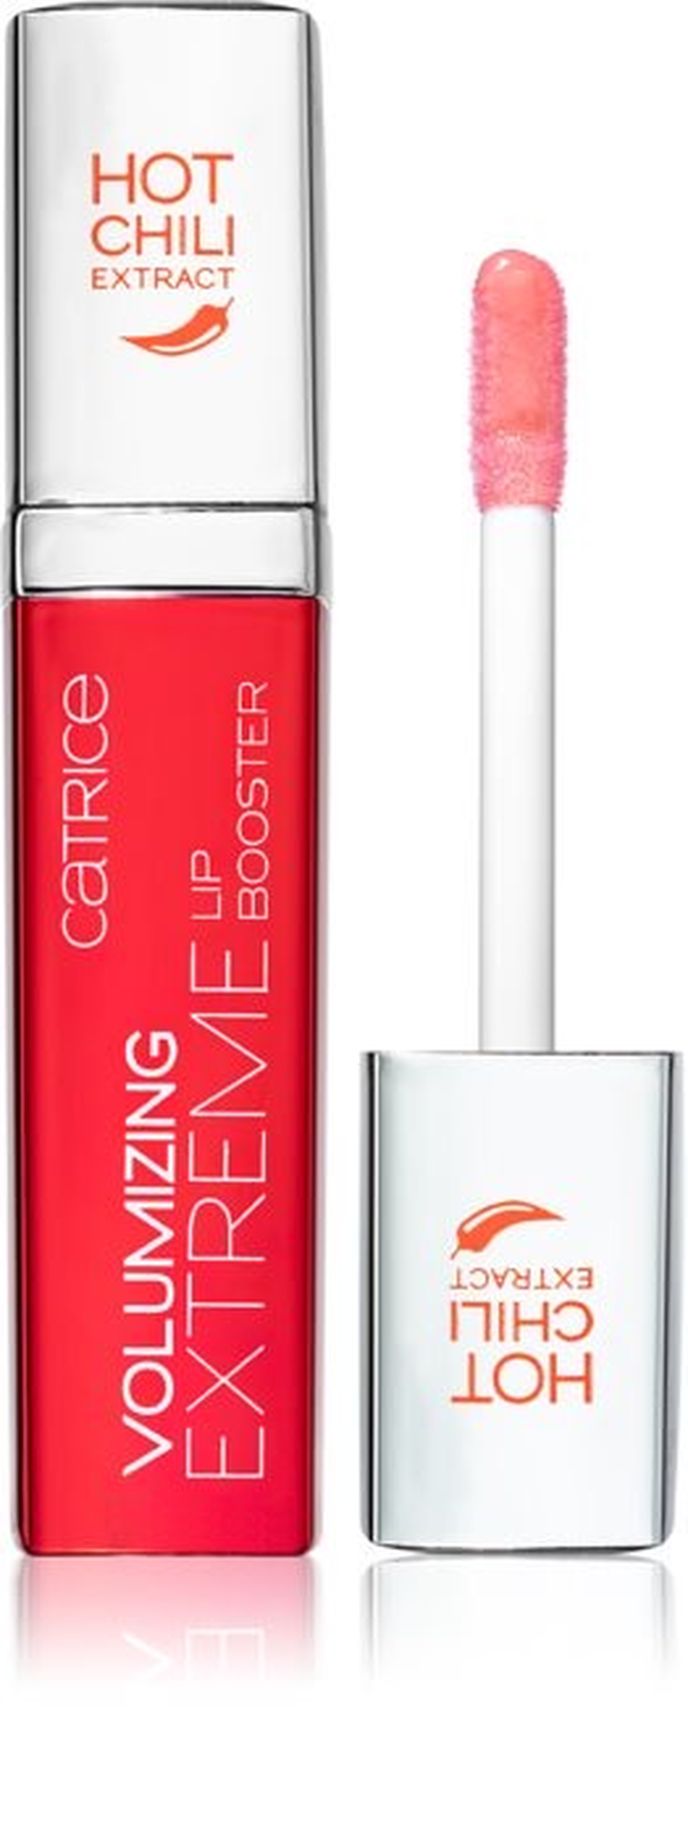 Volumizing Extreme Lip Booster s extraktem z chilli, Catrice, 109 kč, notino.cz